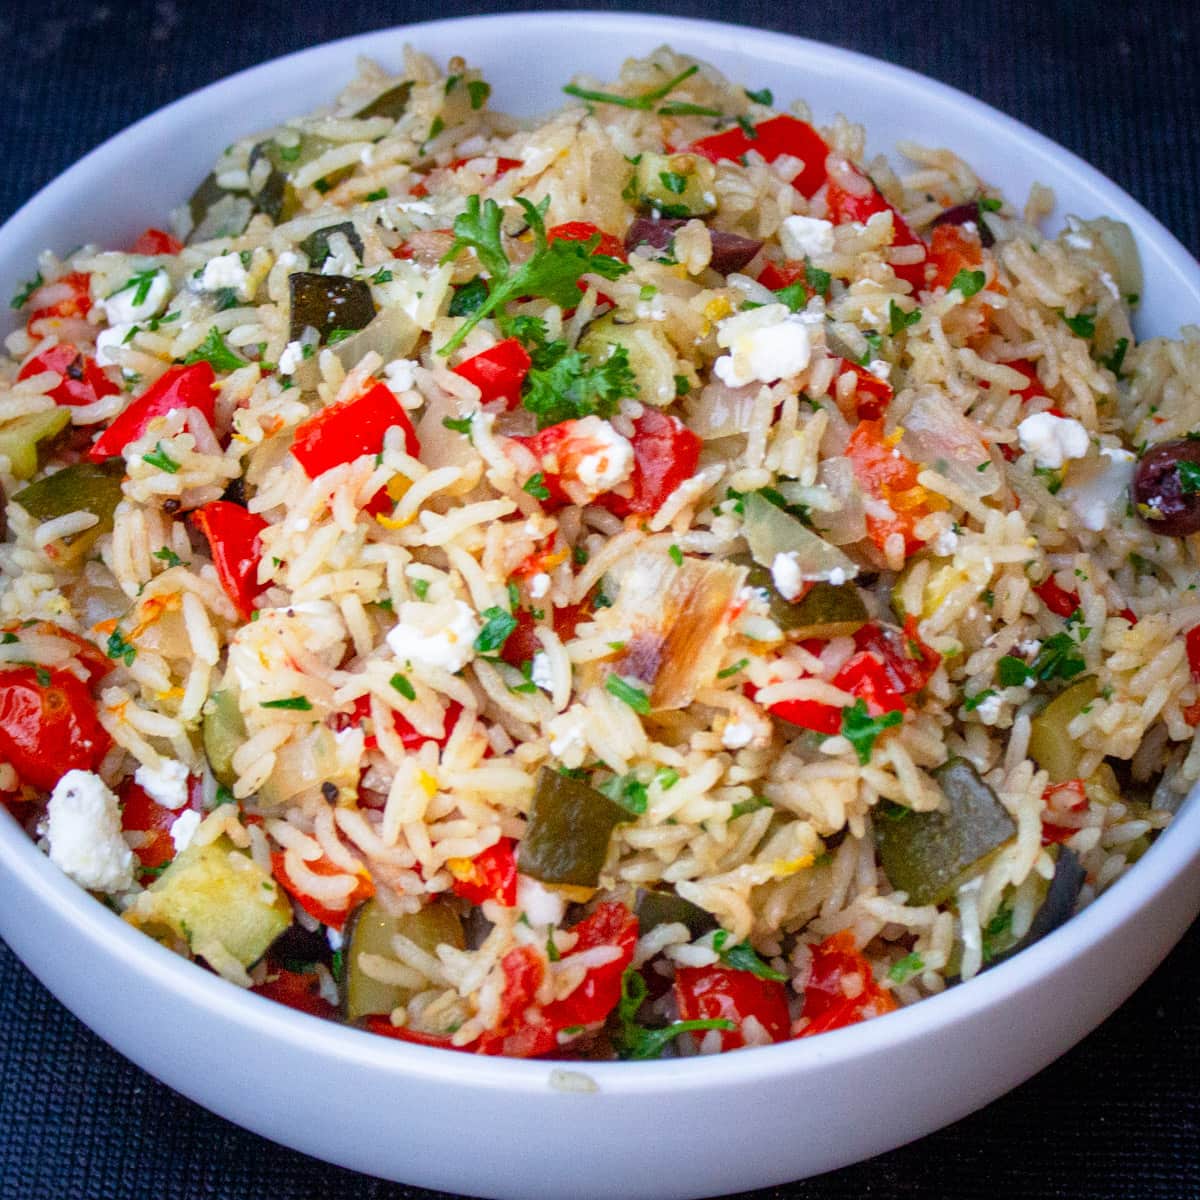 Mediterranean rice with veggies in bowl.